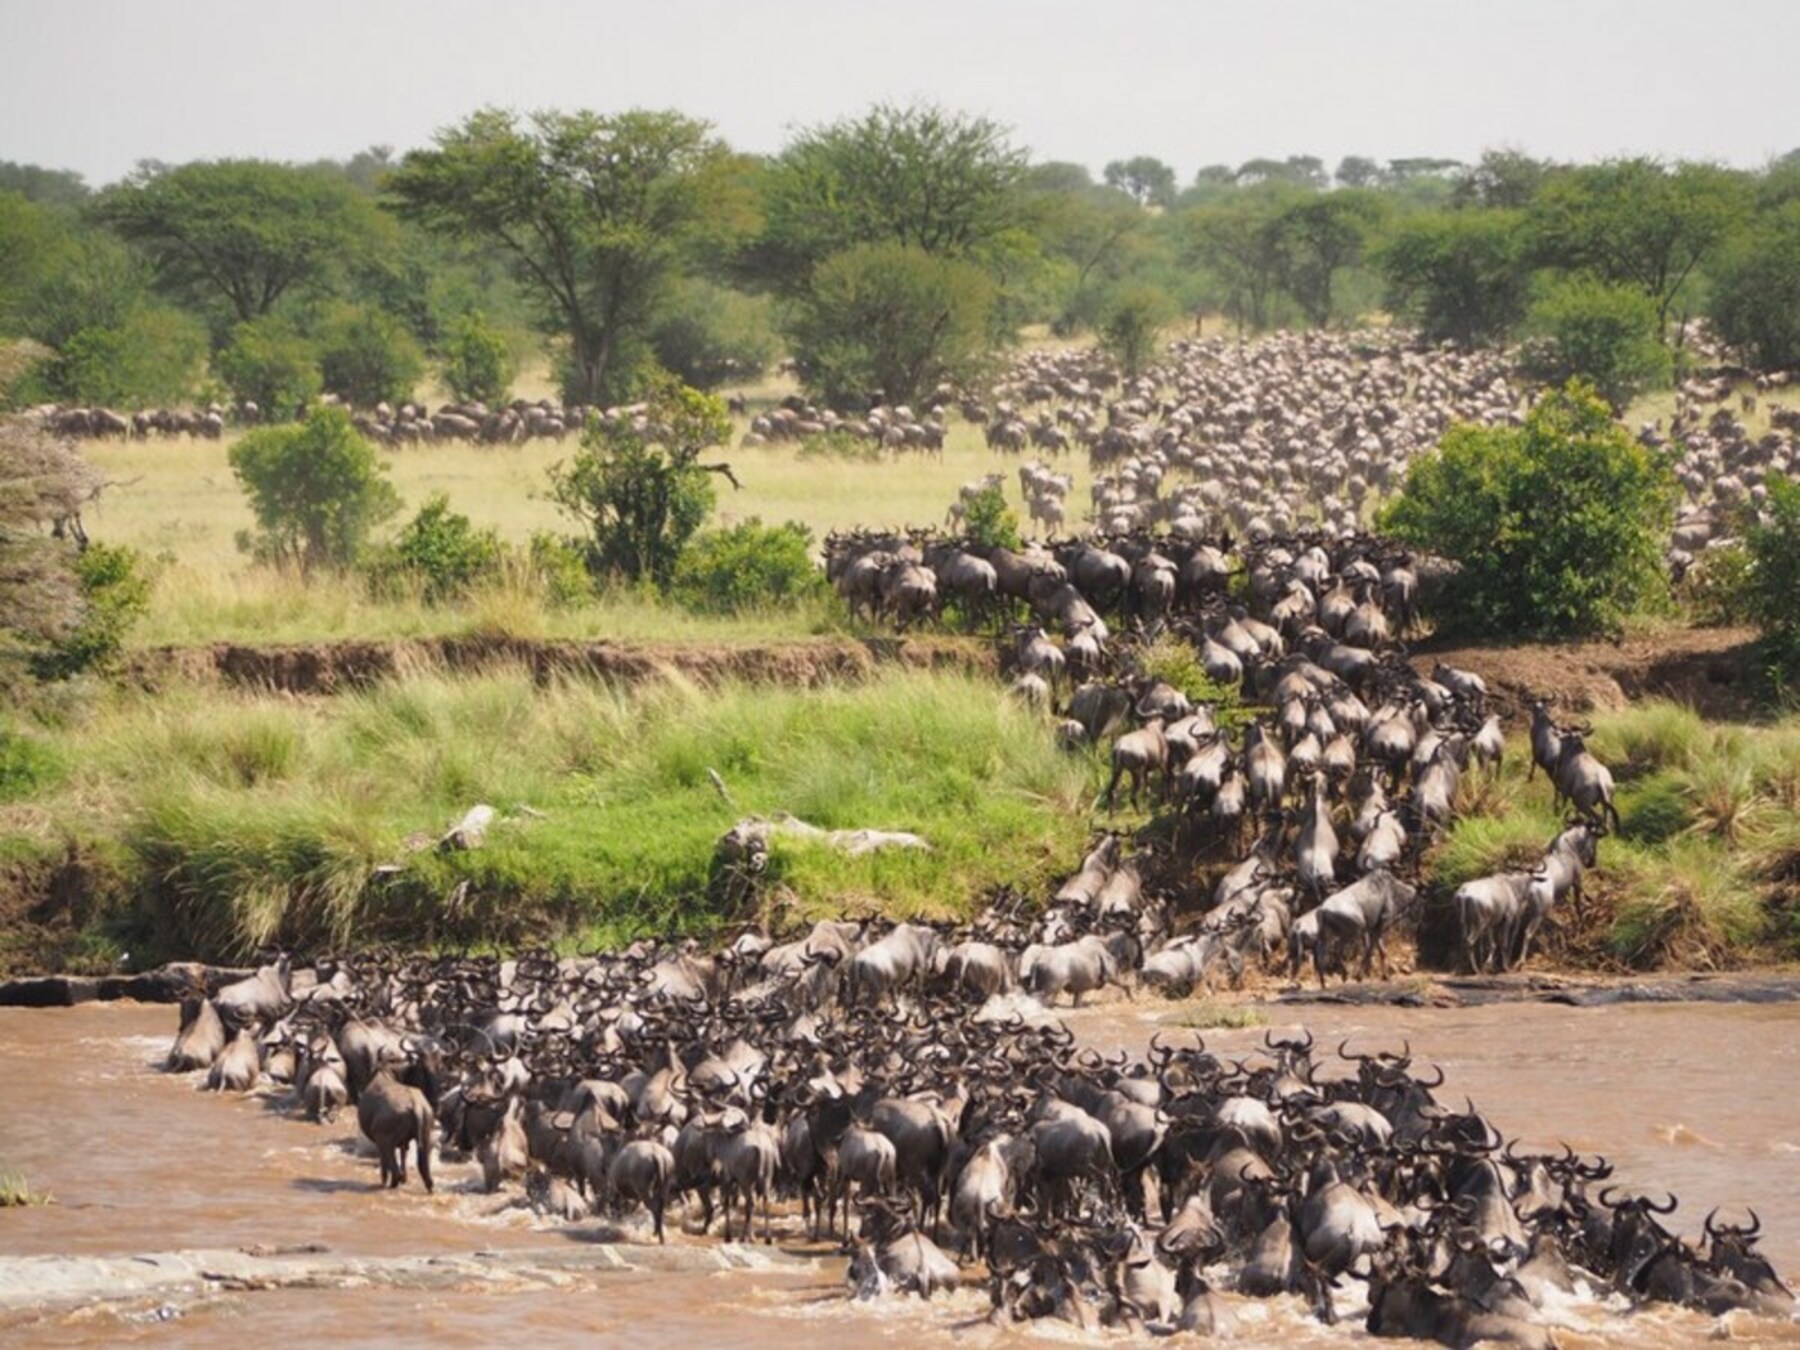 Wildebeests migration in Serengeti